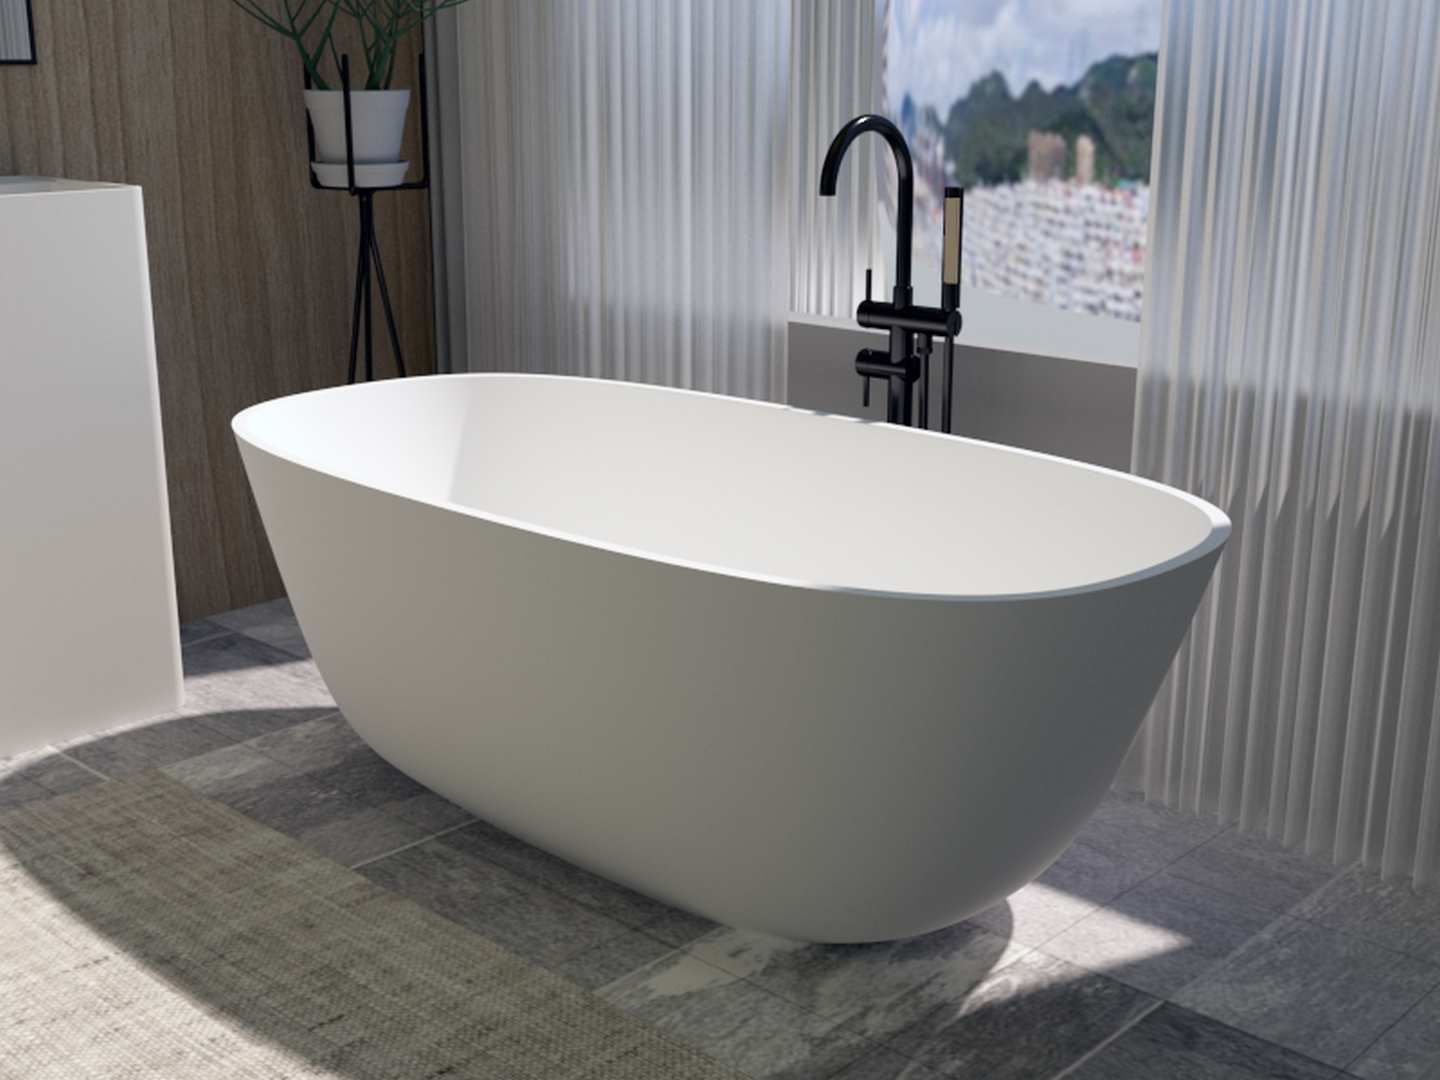 white bathroom bathtub product from Cpingao